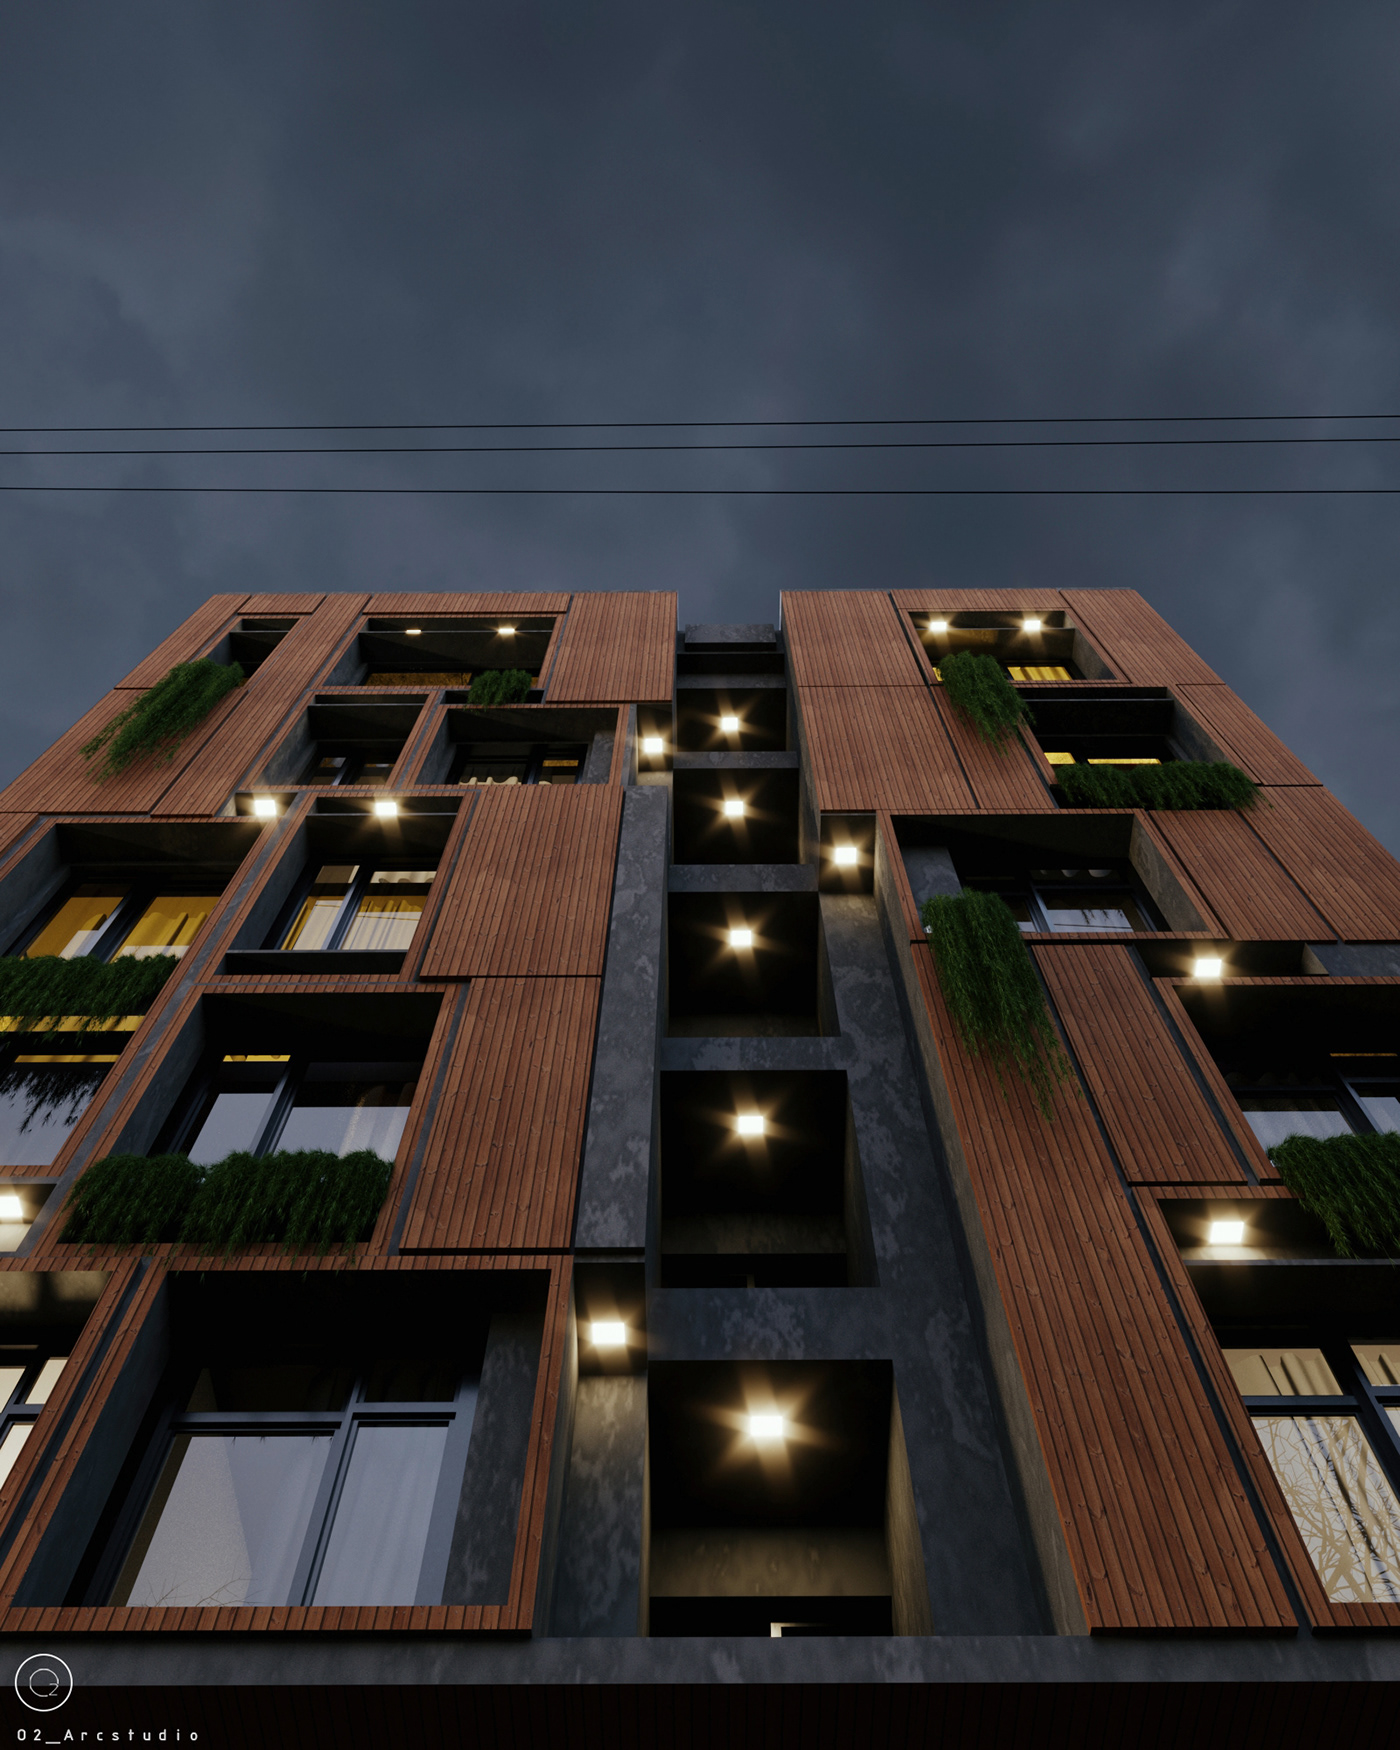 3ds max architecture archviz CGI corona exterior facade Render visualization